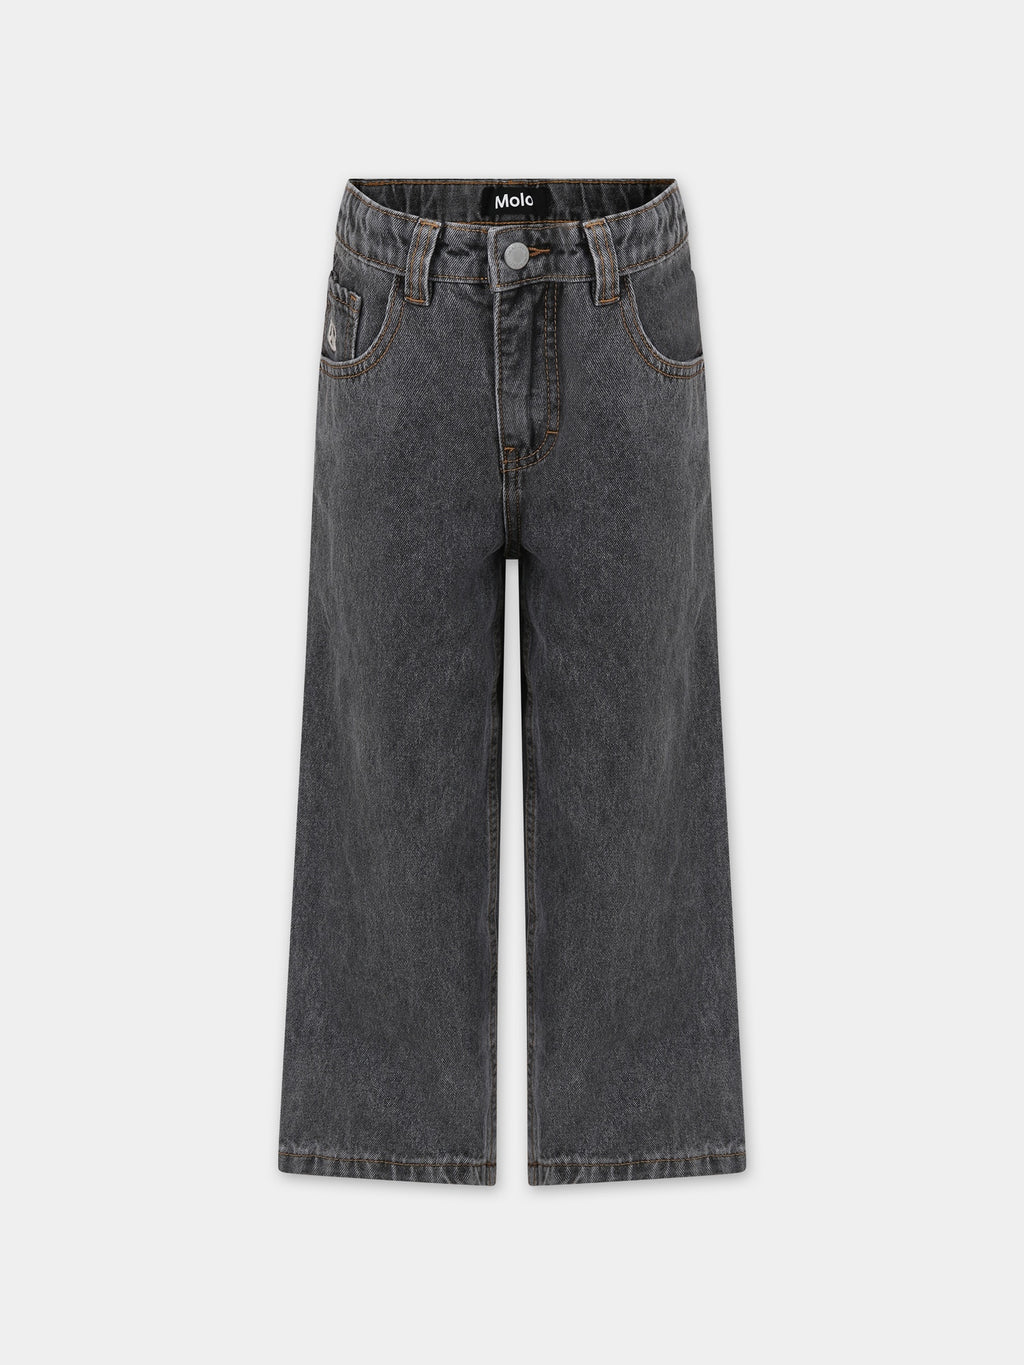 Jeans grigi per bambino con logo